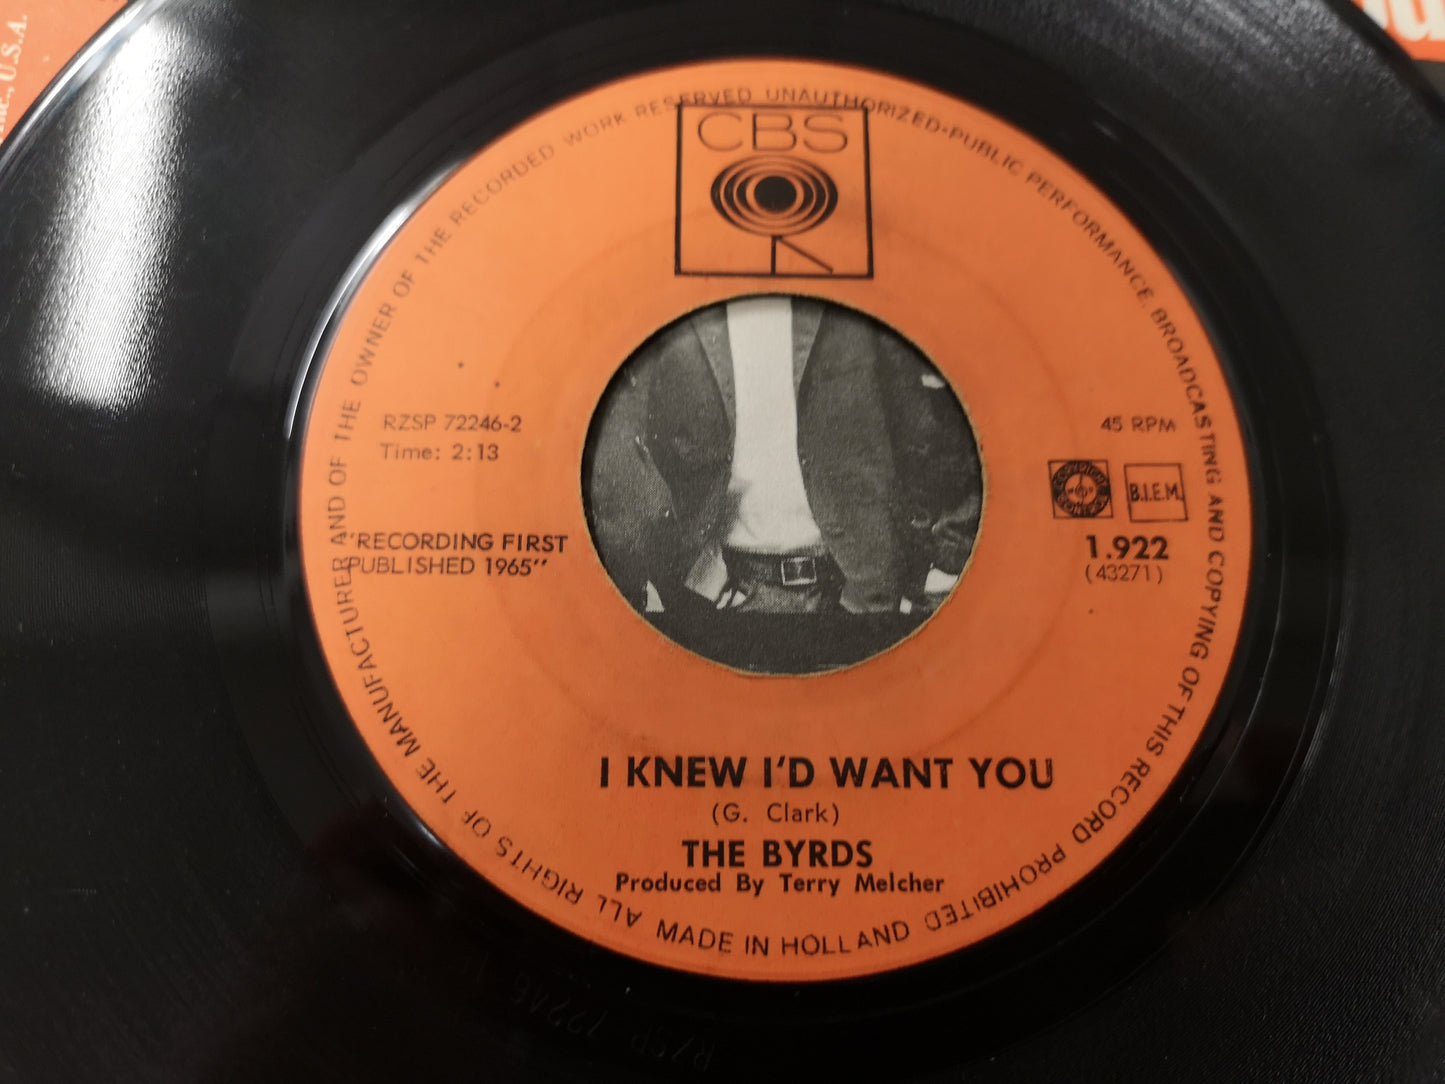 Byrds "Mr. Tambourine Man" Orig Holland 1965 EX/EX (7" Single)